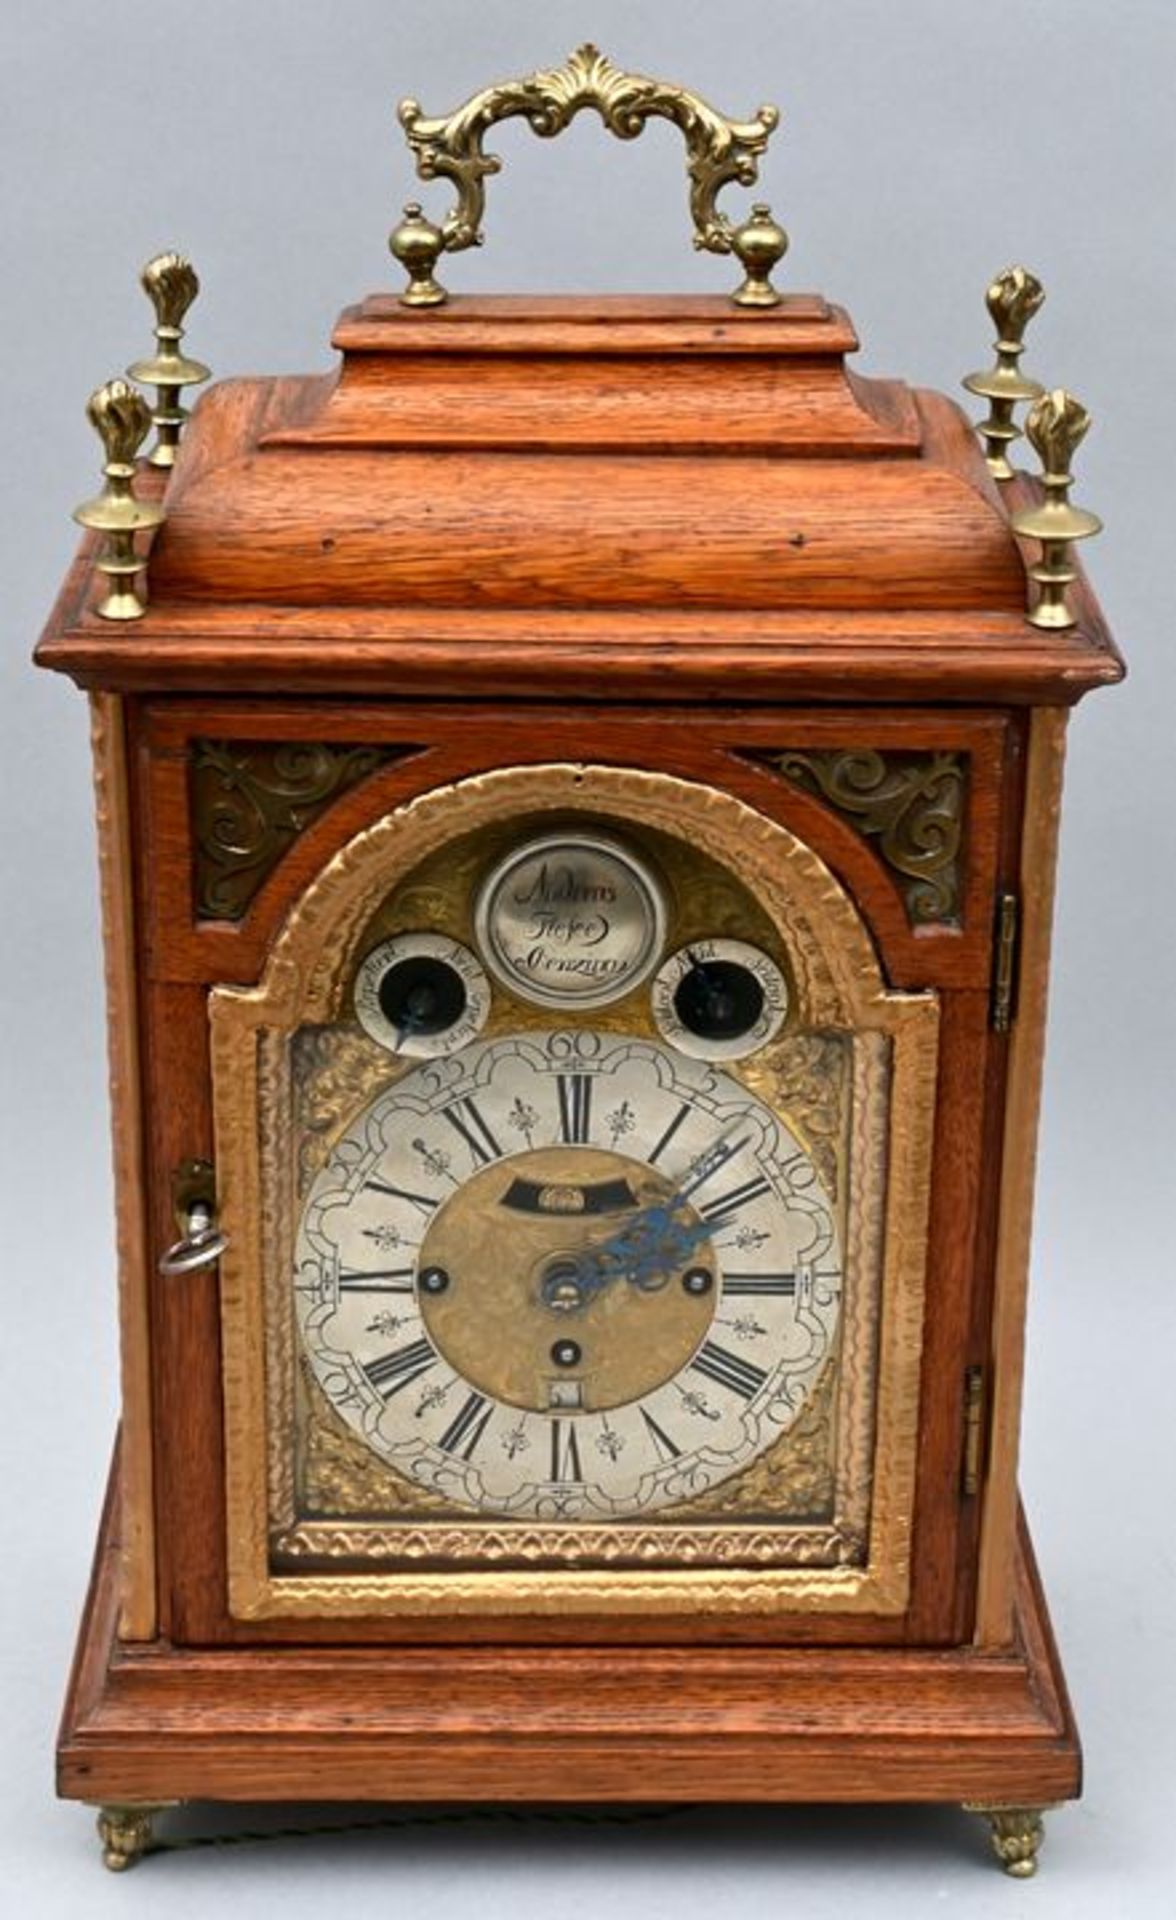 Stockuhr, A. Flesee Clenzing/ bracket clock